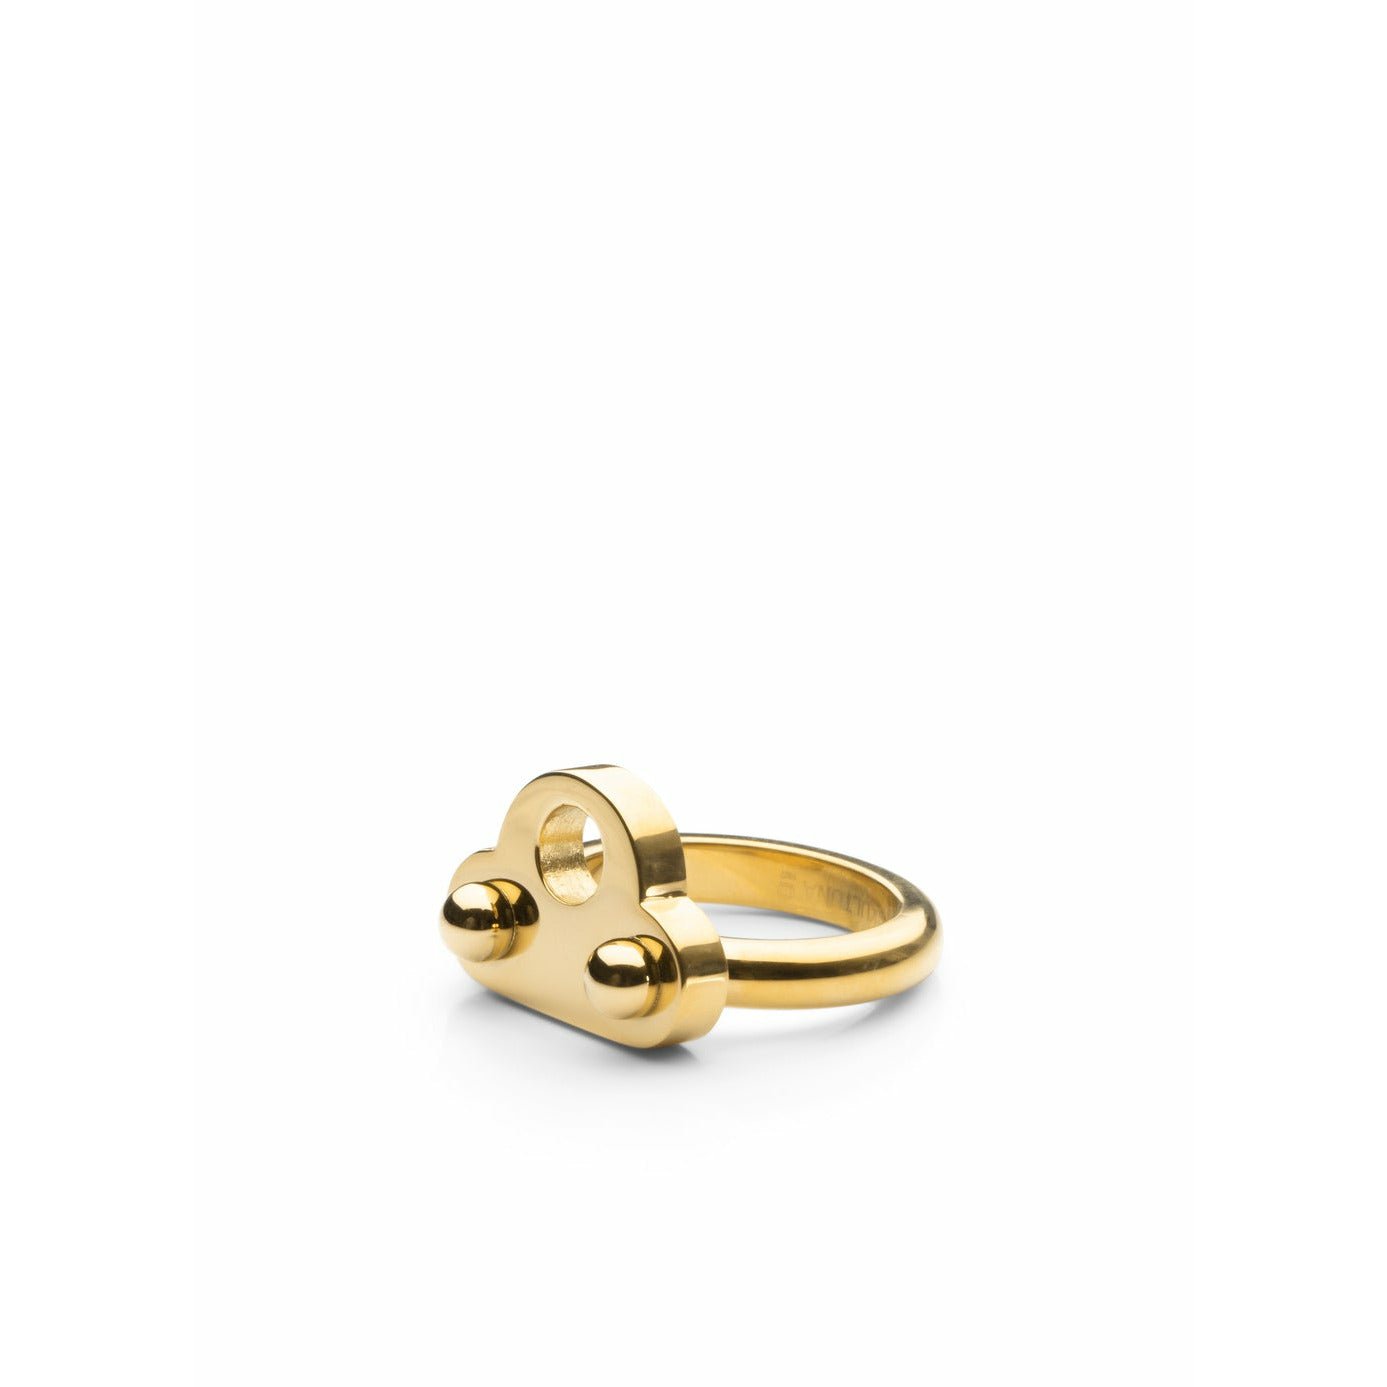 Skultuna Key Signet Ring klein, vergoldet, Ø1,6 cm